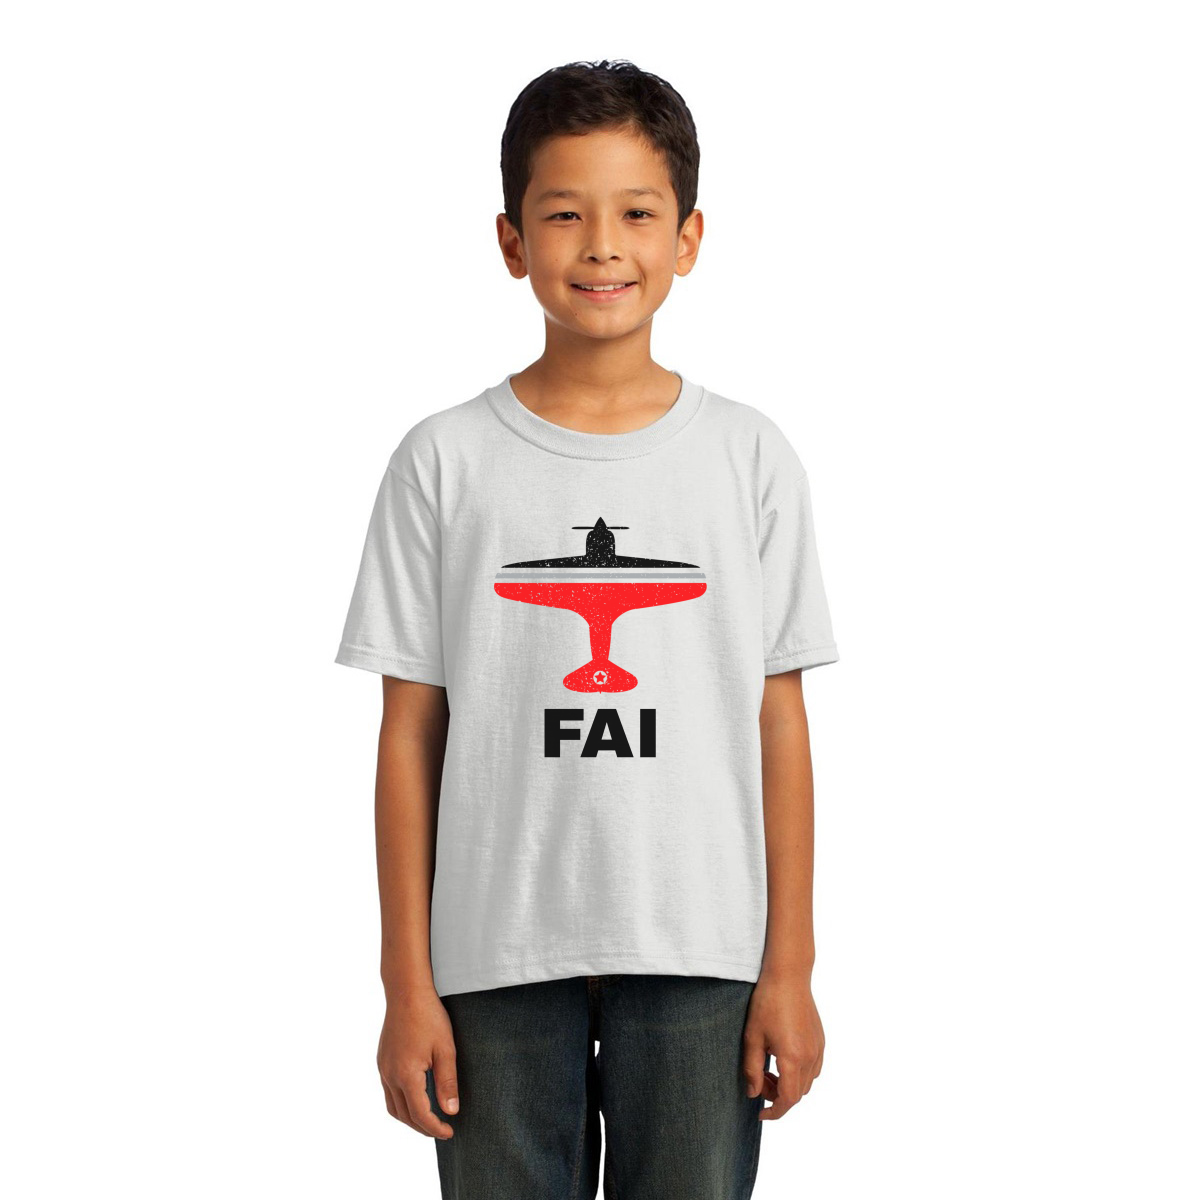 Fly Fairbanks FAI Airport Kids T-shirt | White